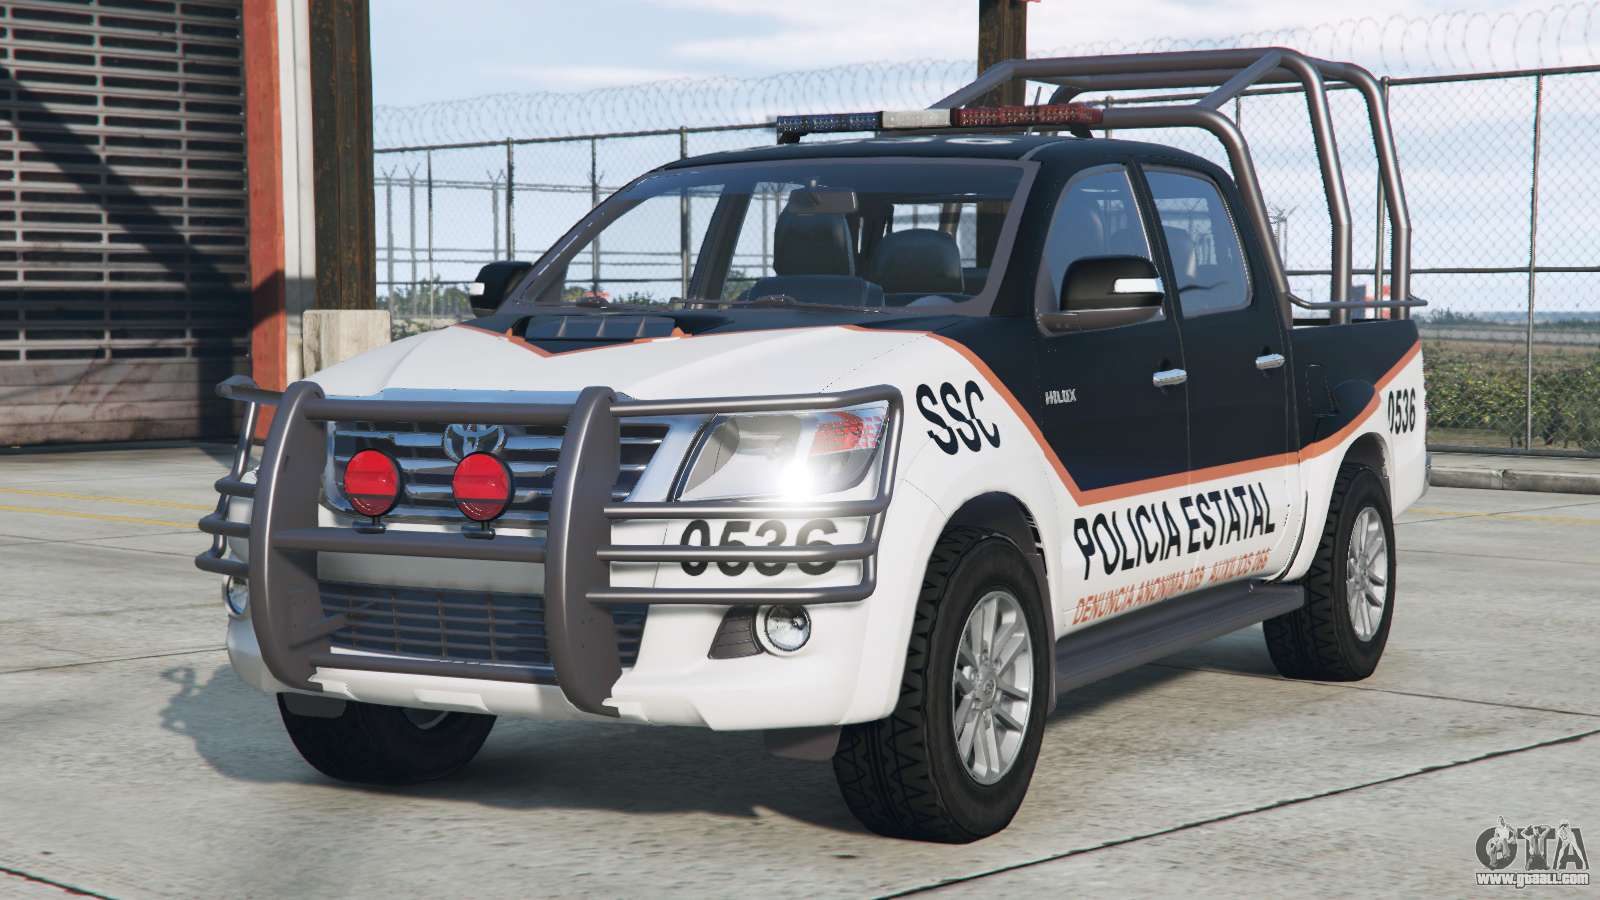 Vulcar Ingot Policia for GTA 5